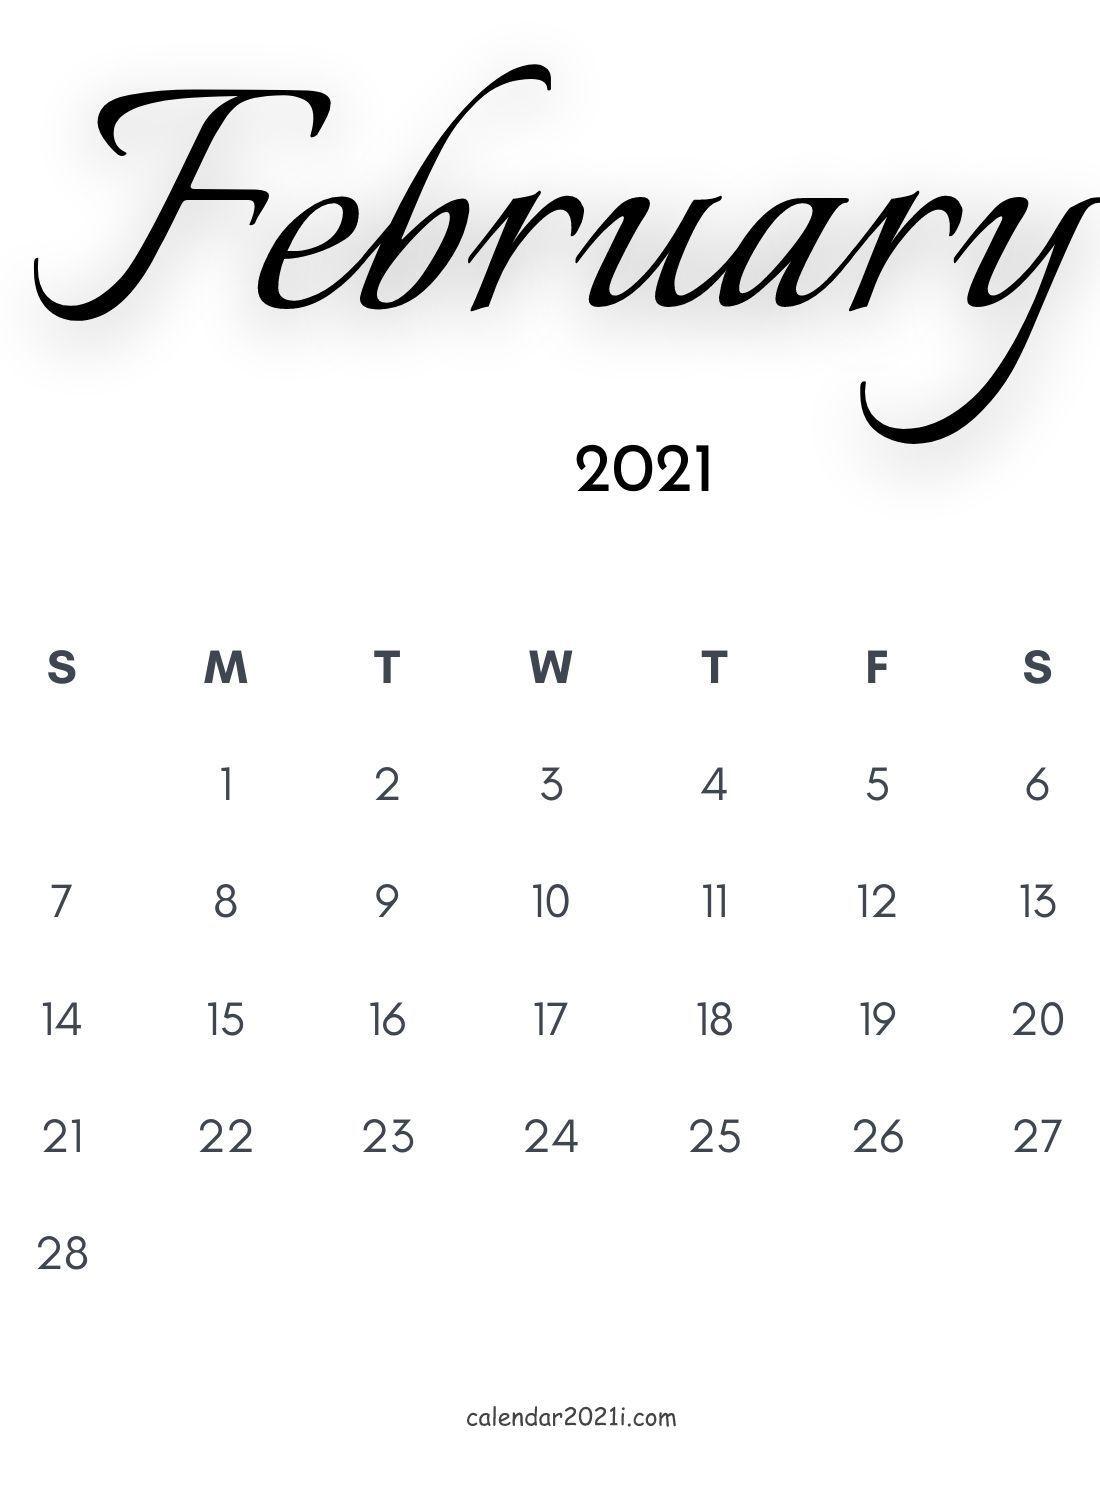 February 2021 Calendar Wallpapers Top Free February 2021 Calendar Backgrounds Wallpaperaccess Get your free printable contemporary 2021 calendar today. february 2021 calendar wallpapers top